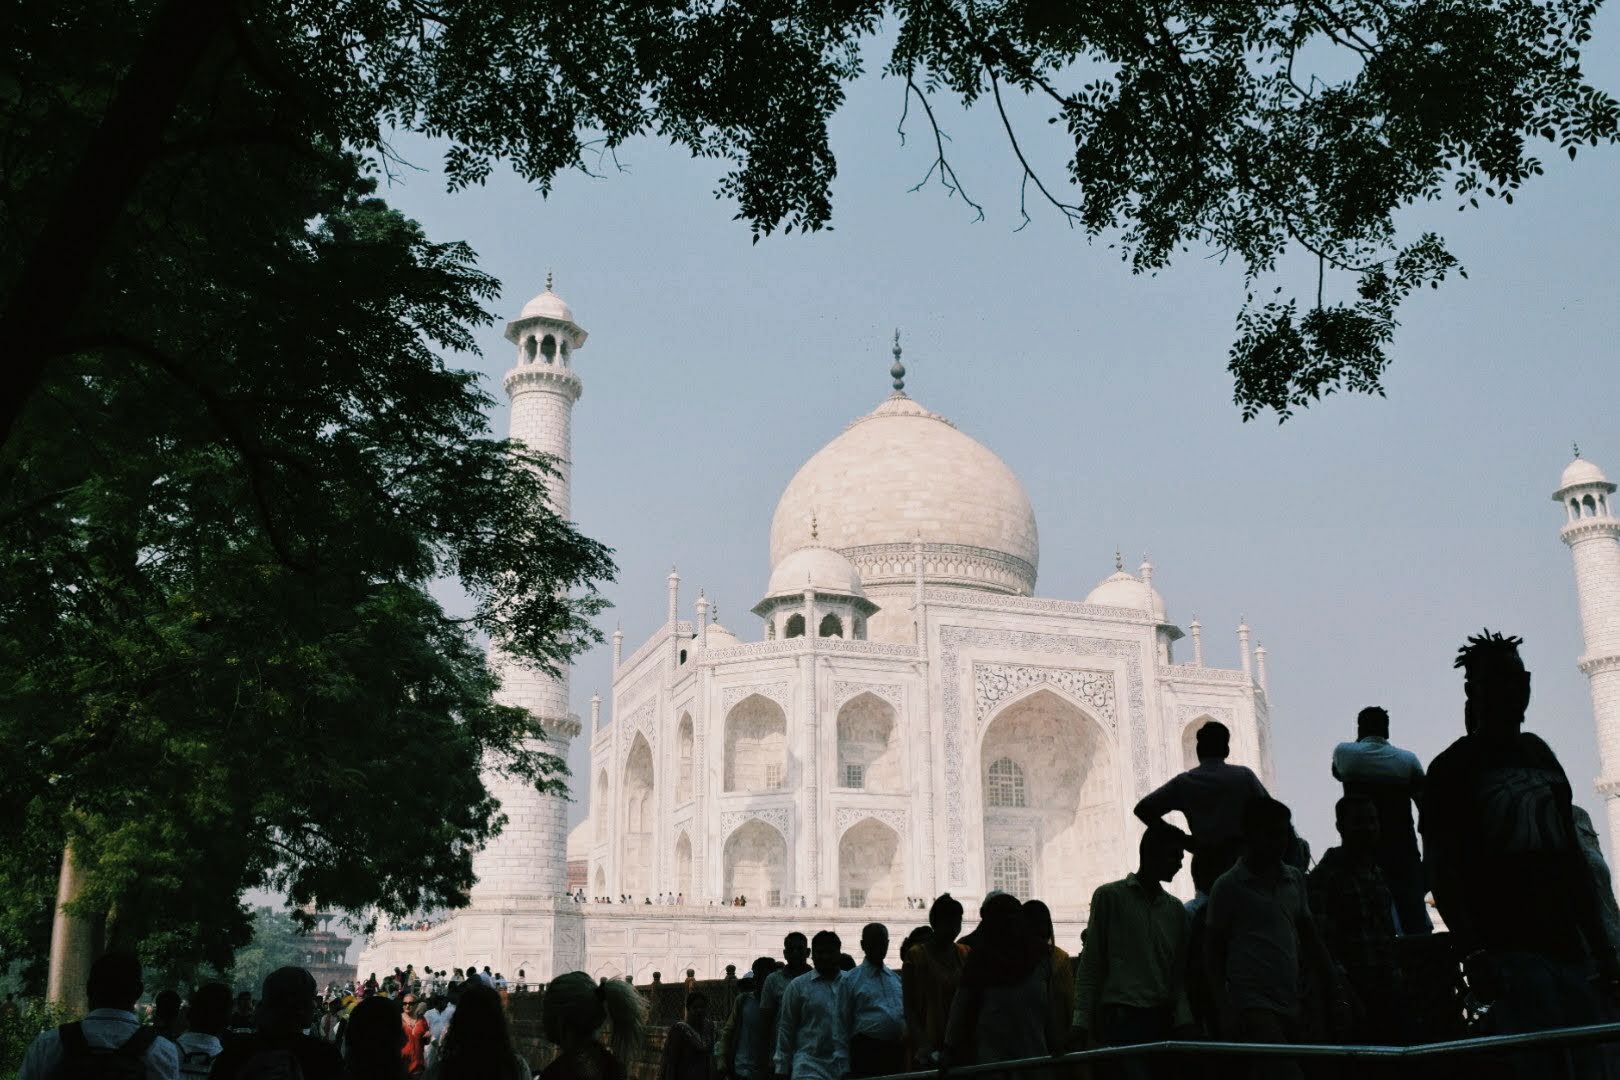 Tuk Tuks and the Taj Mahal